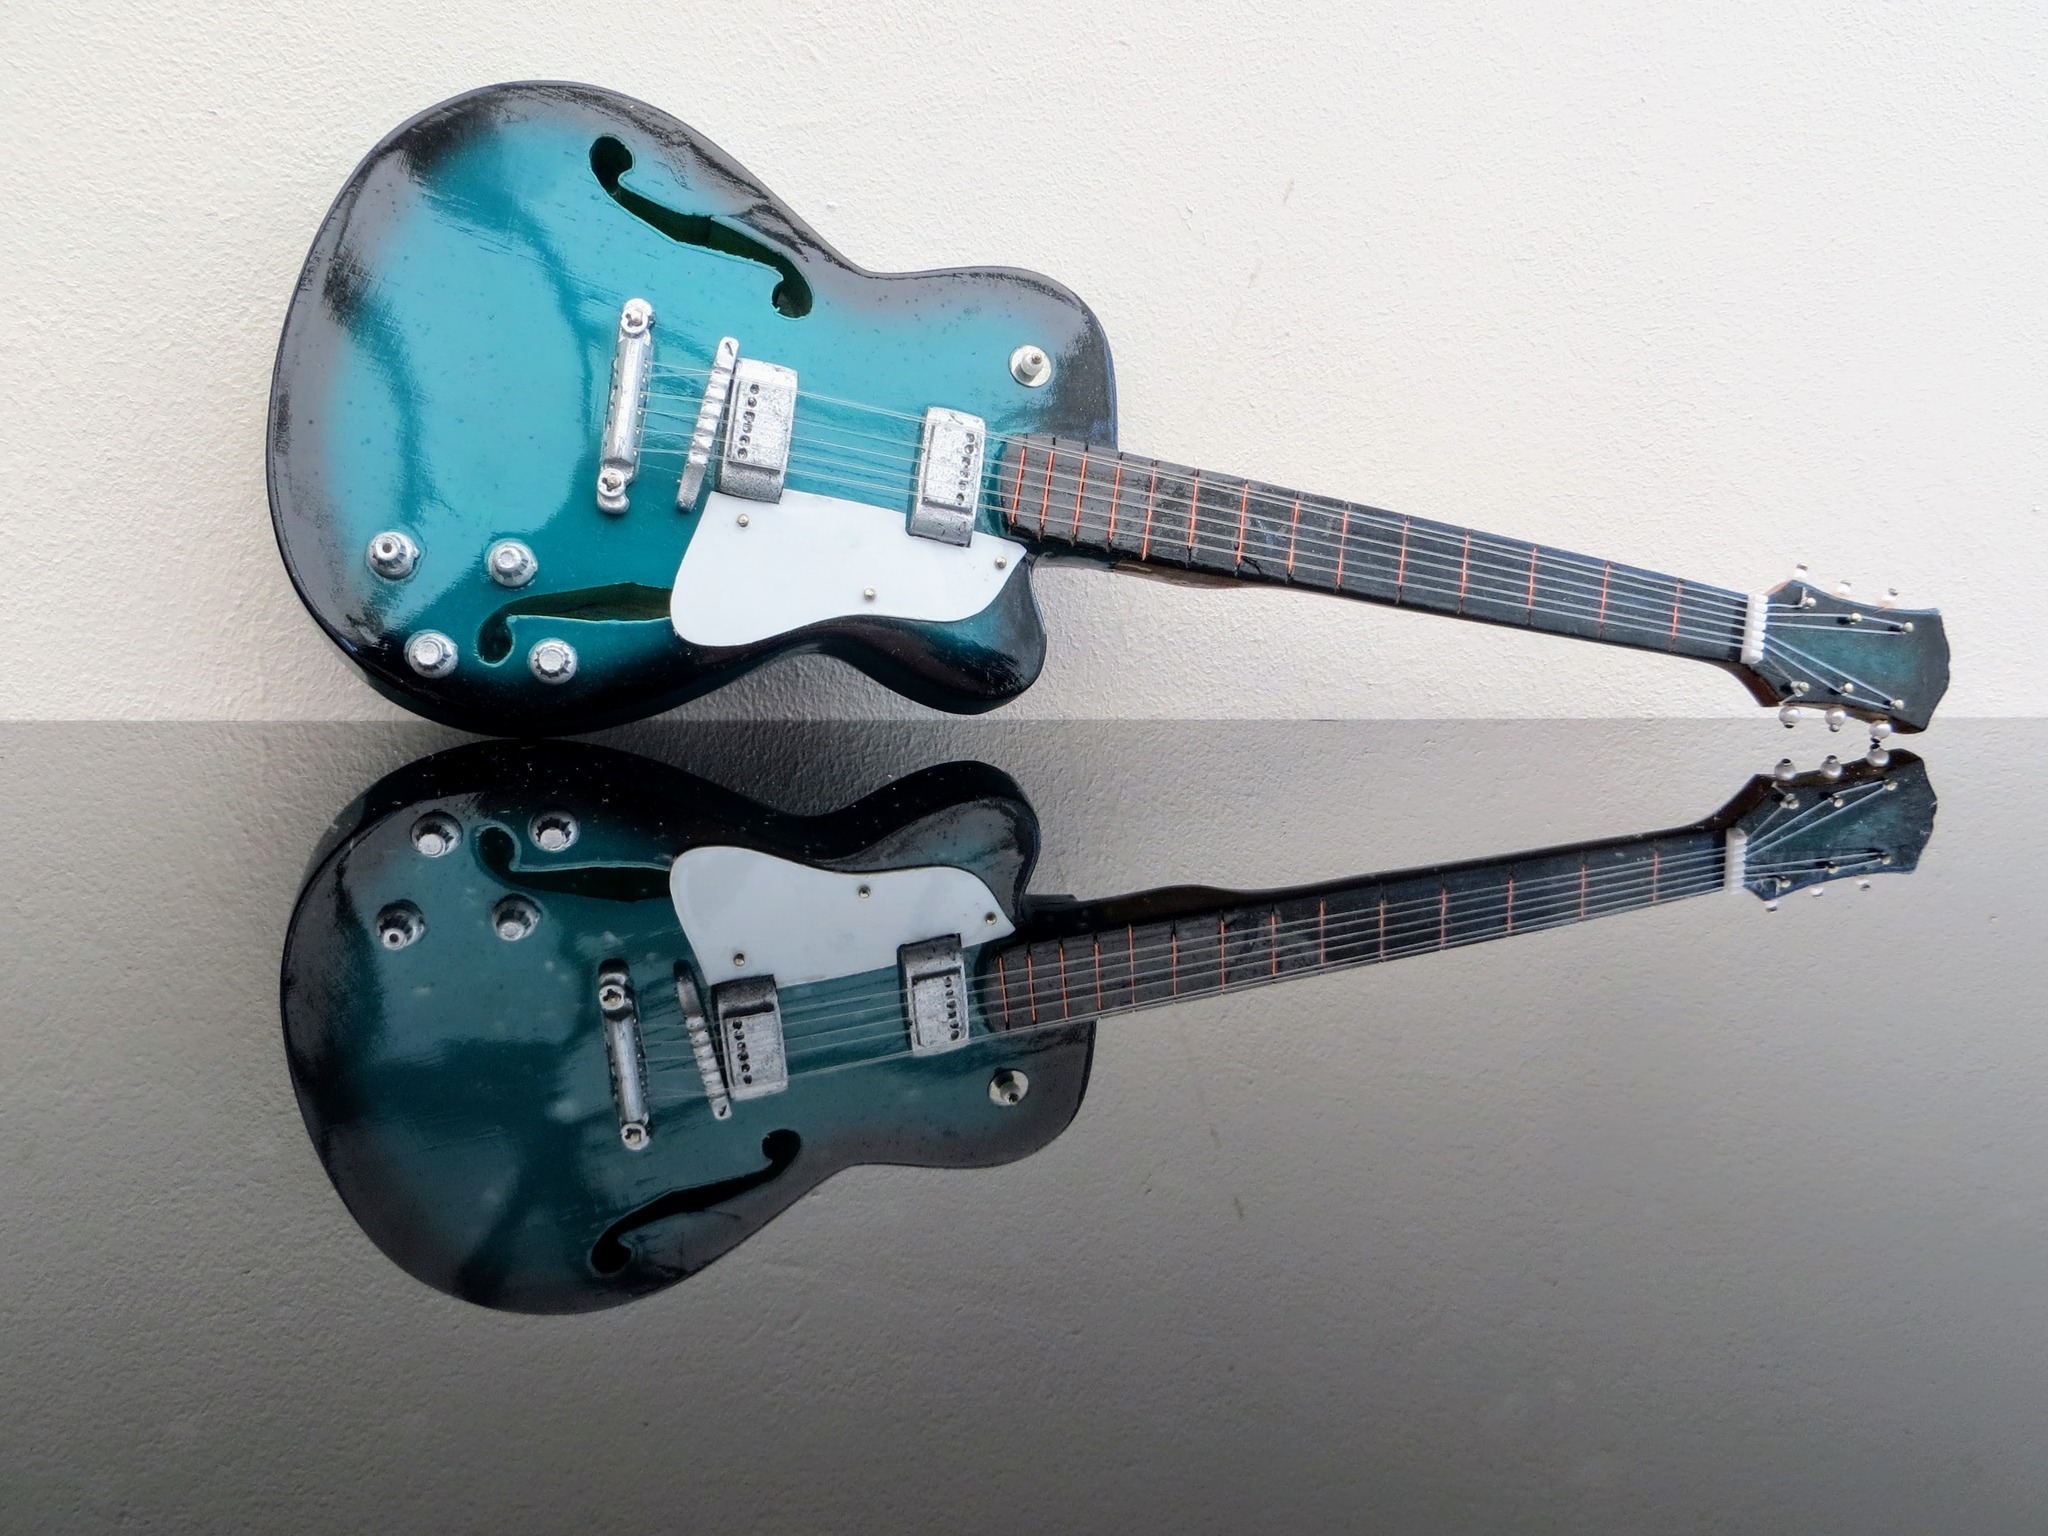 Blue guitar. Picture: Gareth Moules